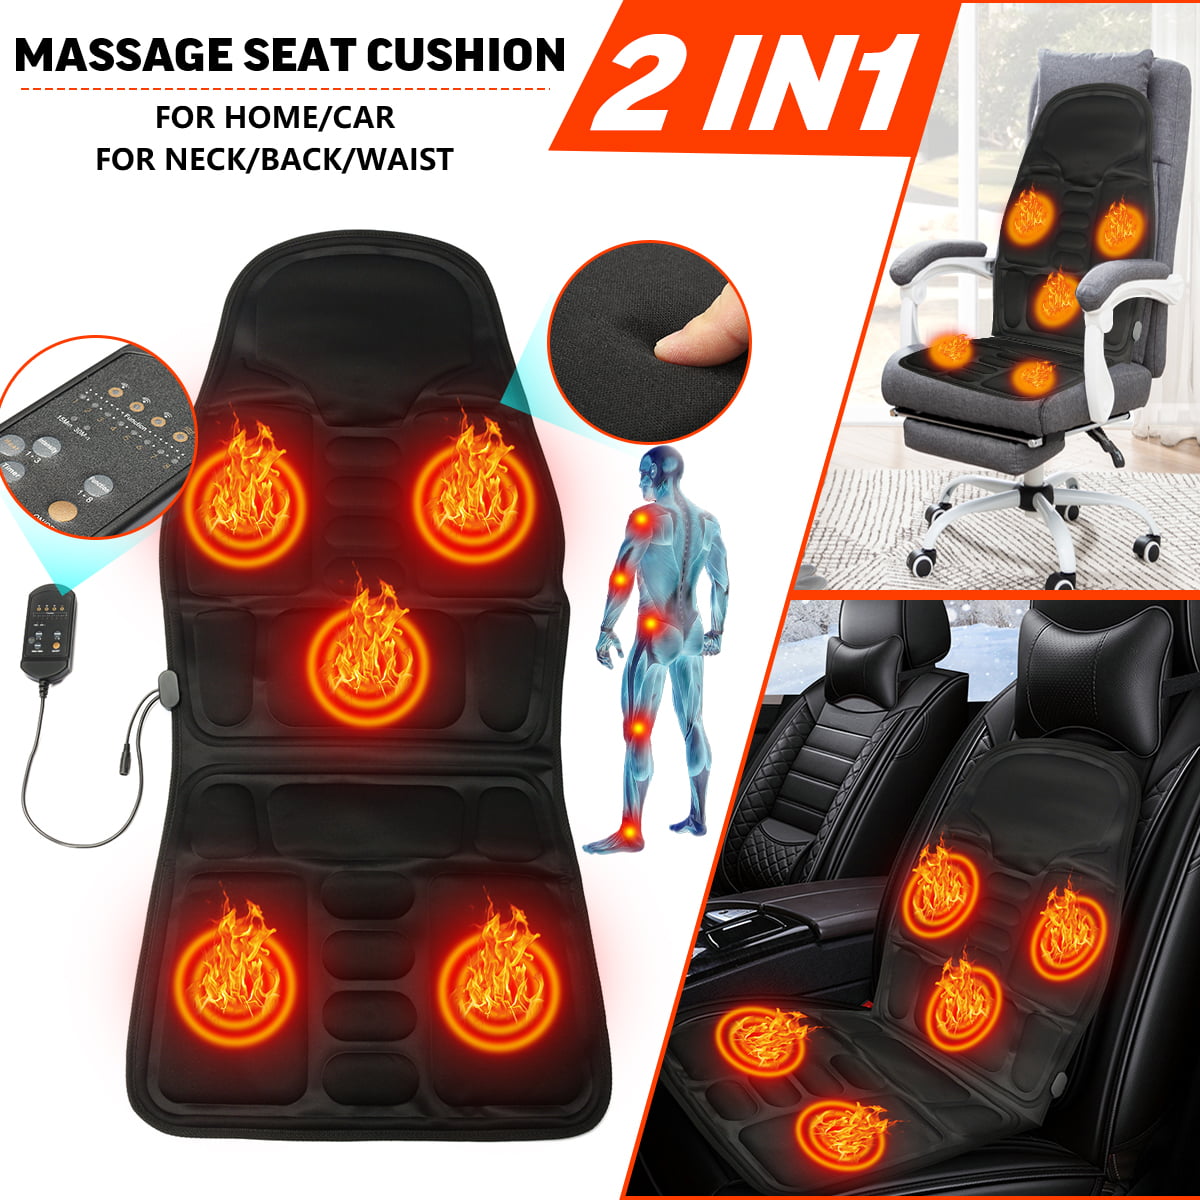 Heated Back Massage Massager Cushion Car Home Chair Seat Cushion Neck